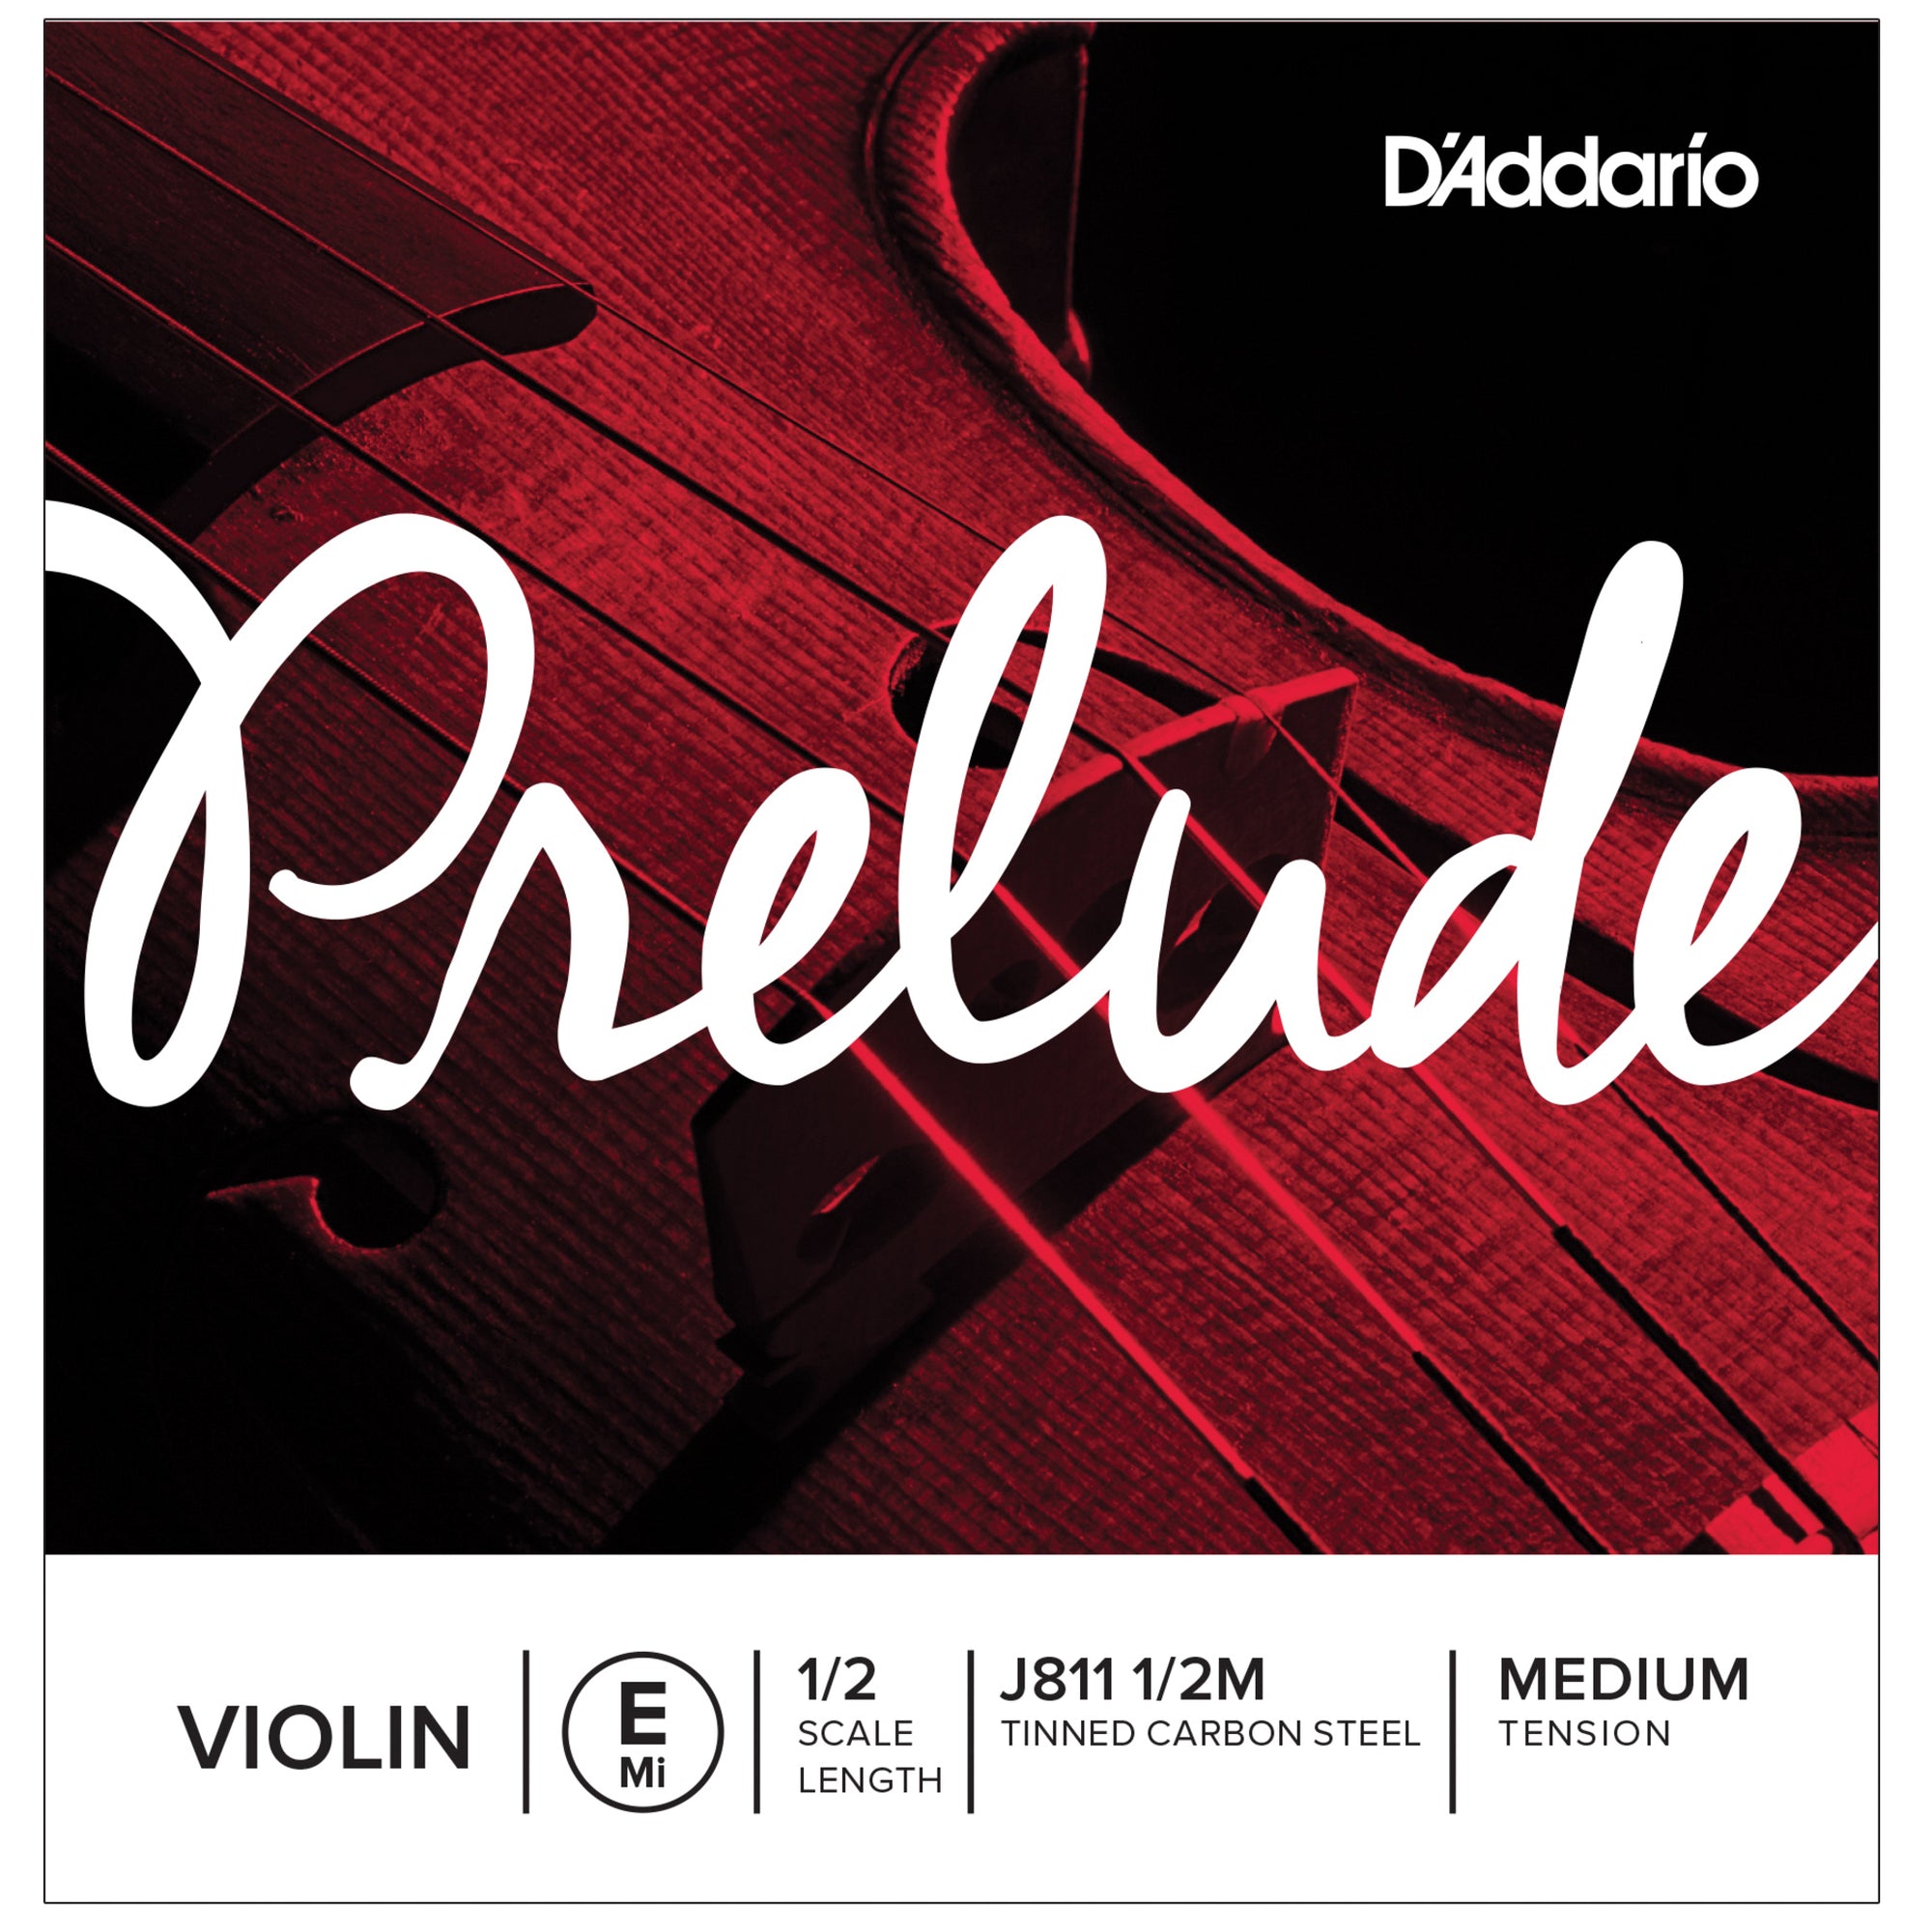 D'Addario J811 1/2M Prelude 1/2 E Violin Single String Medium J811